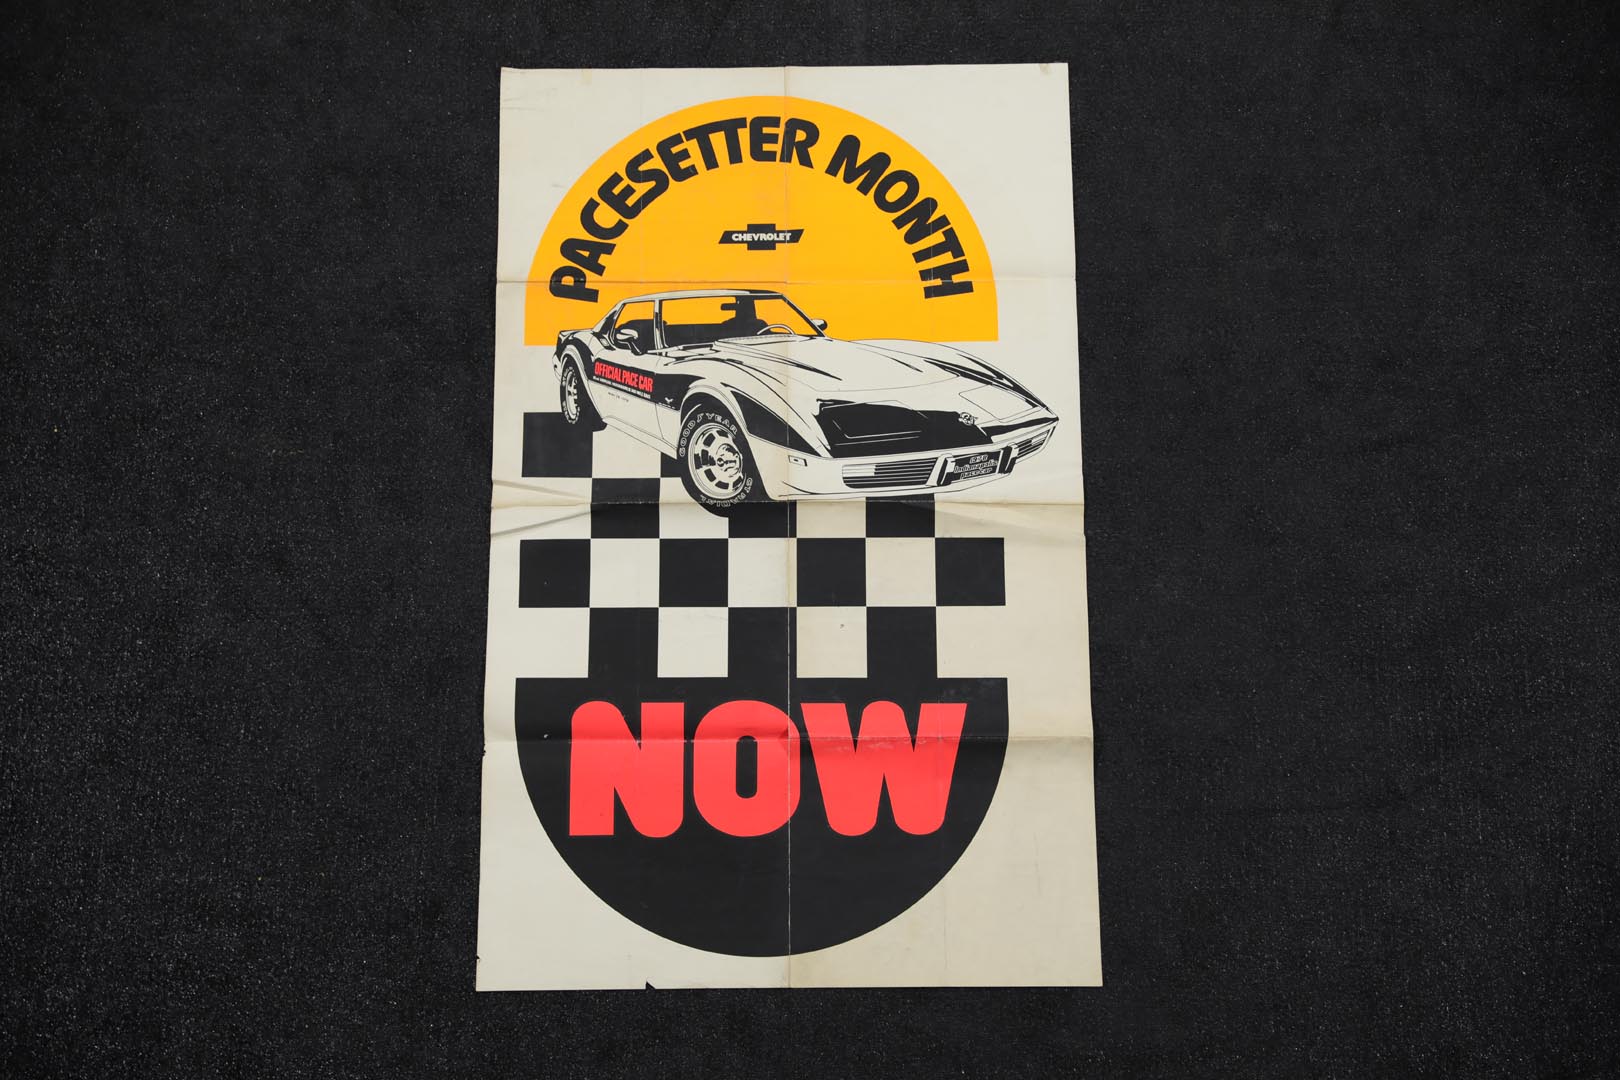  1978 Chevrolet Corvette Pace C ar Large Advertising Poster 